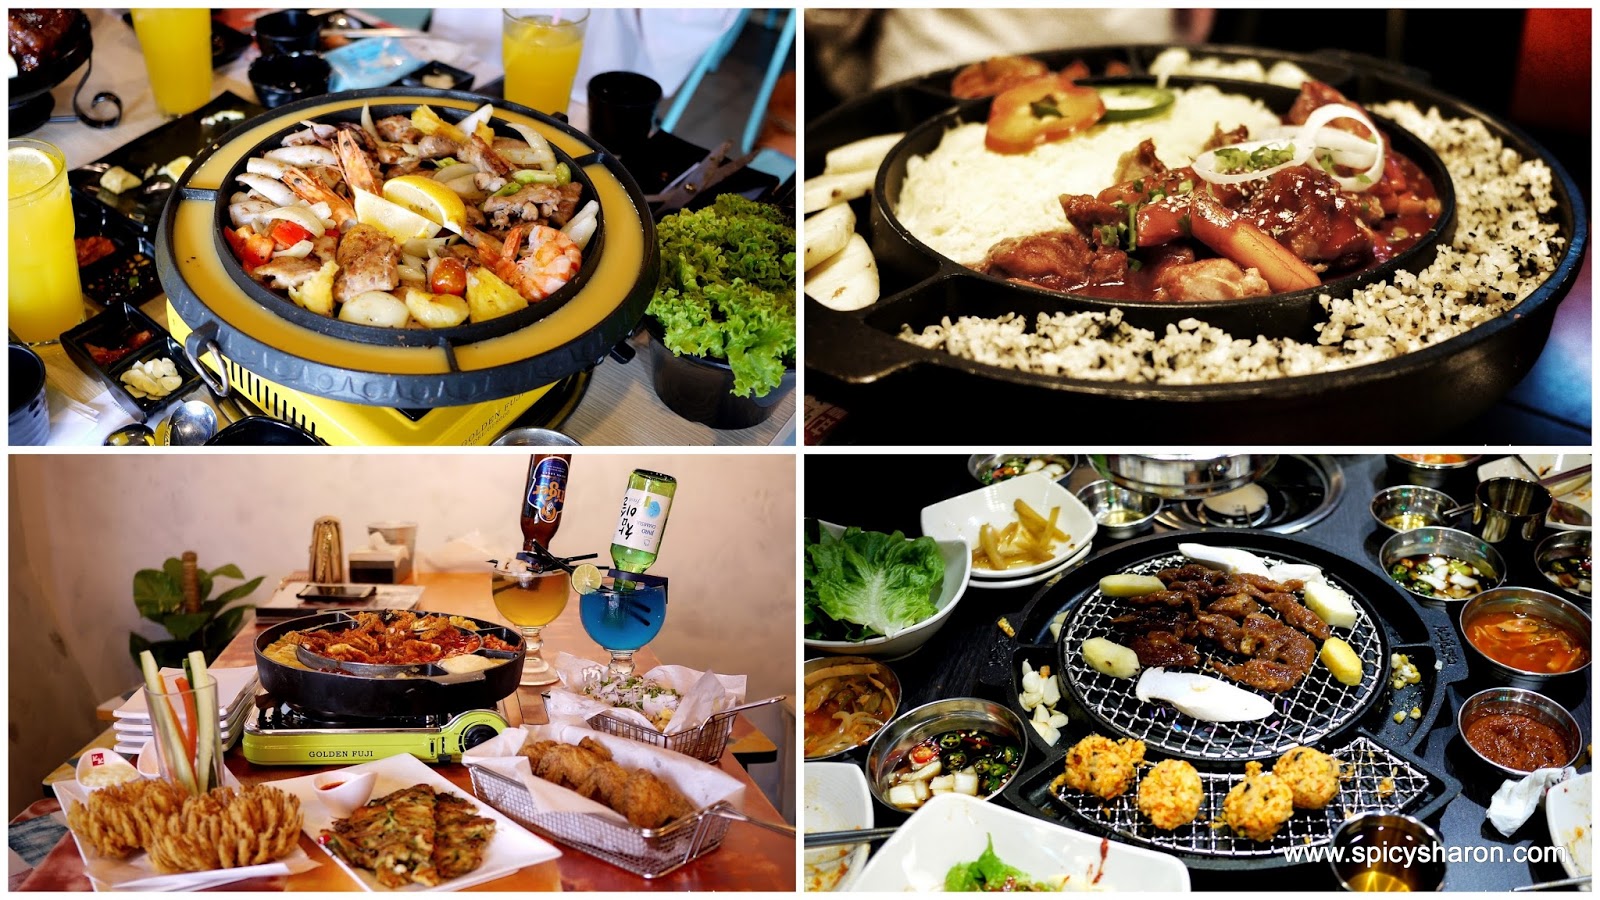 Top 4 New Korean Restaurants To Visit In Ss15 Subang Jaya Spicy Sharon A Malaysian Lifestyle And Food Blog